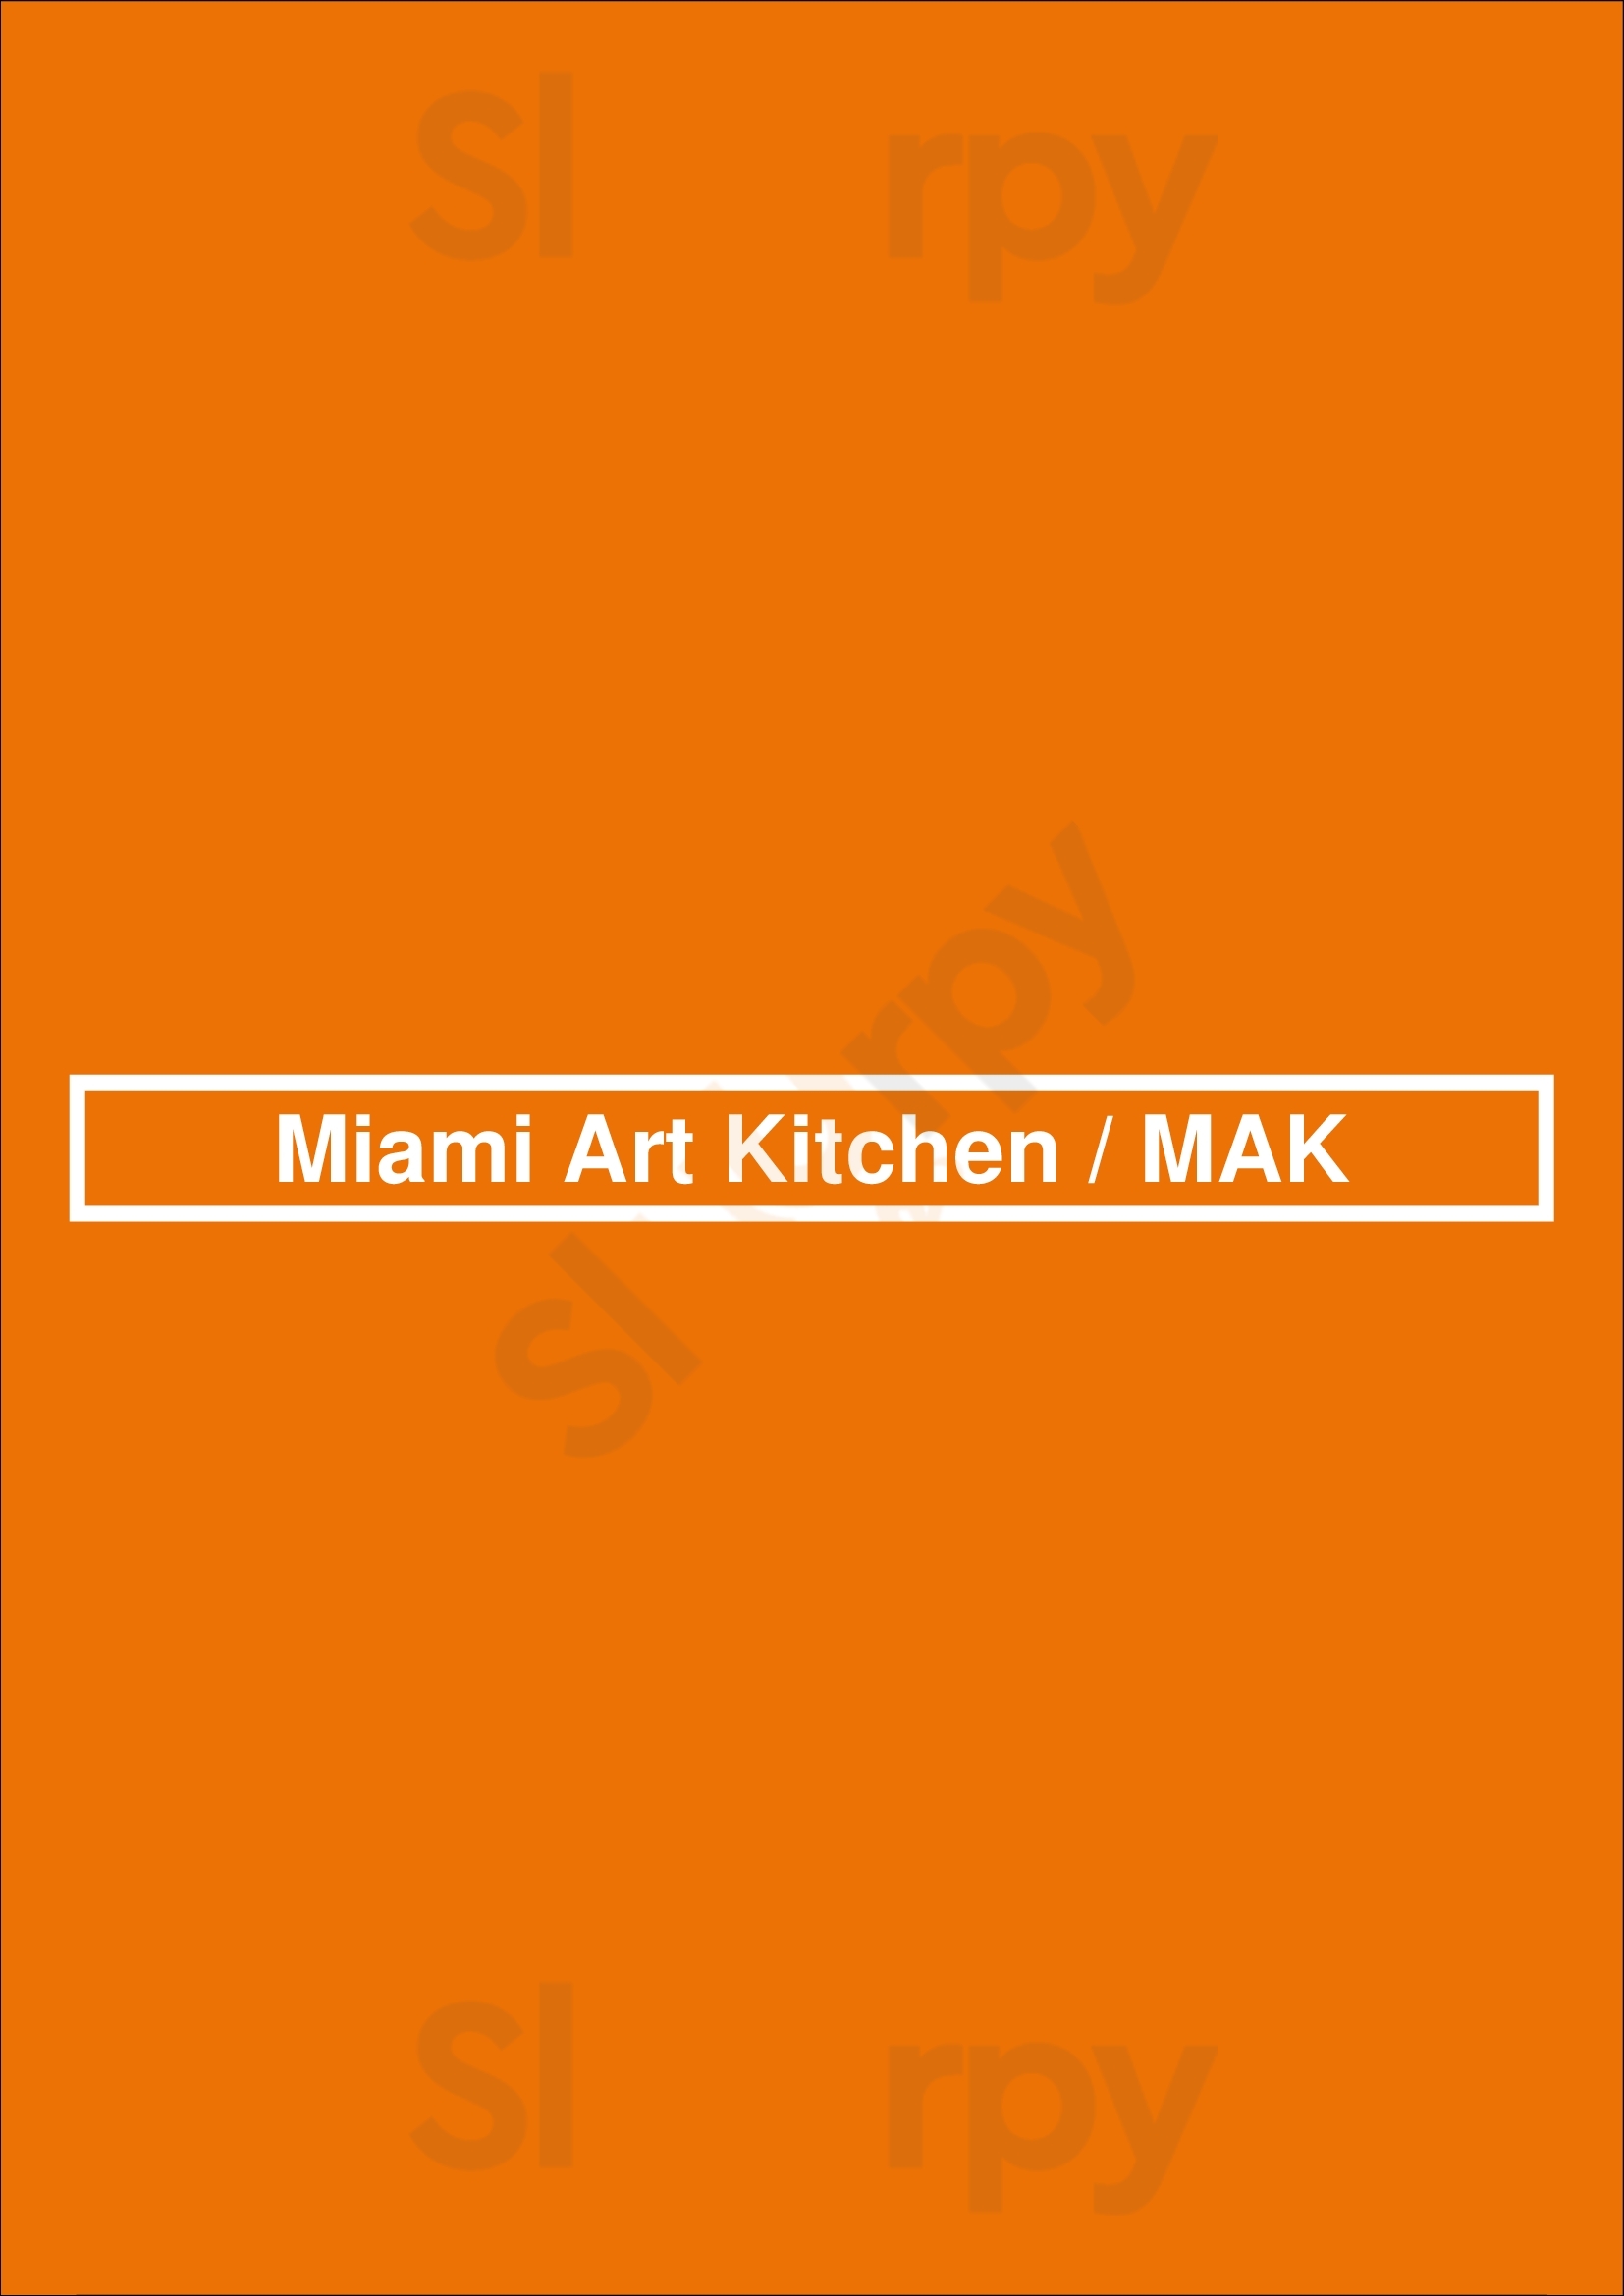 Miami Art Kitchen / Mak Miami Beach Menu - 1